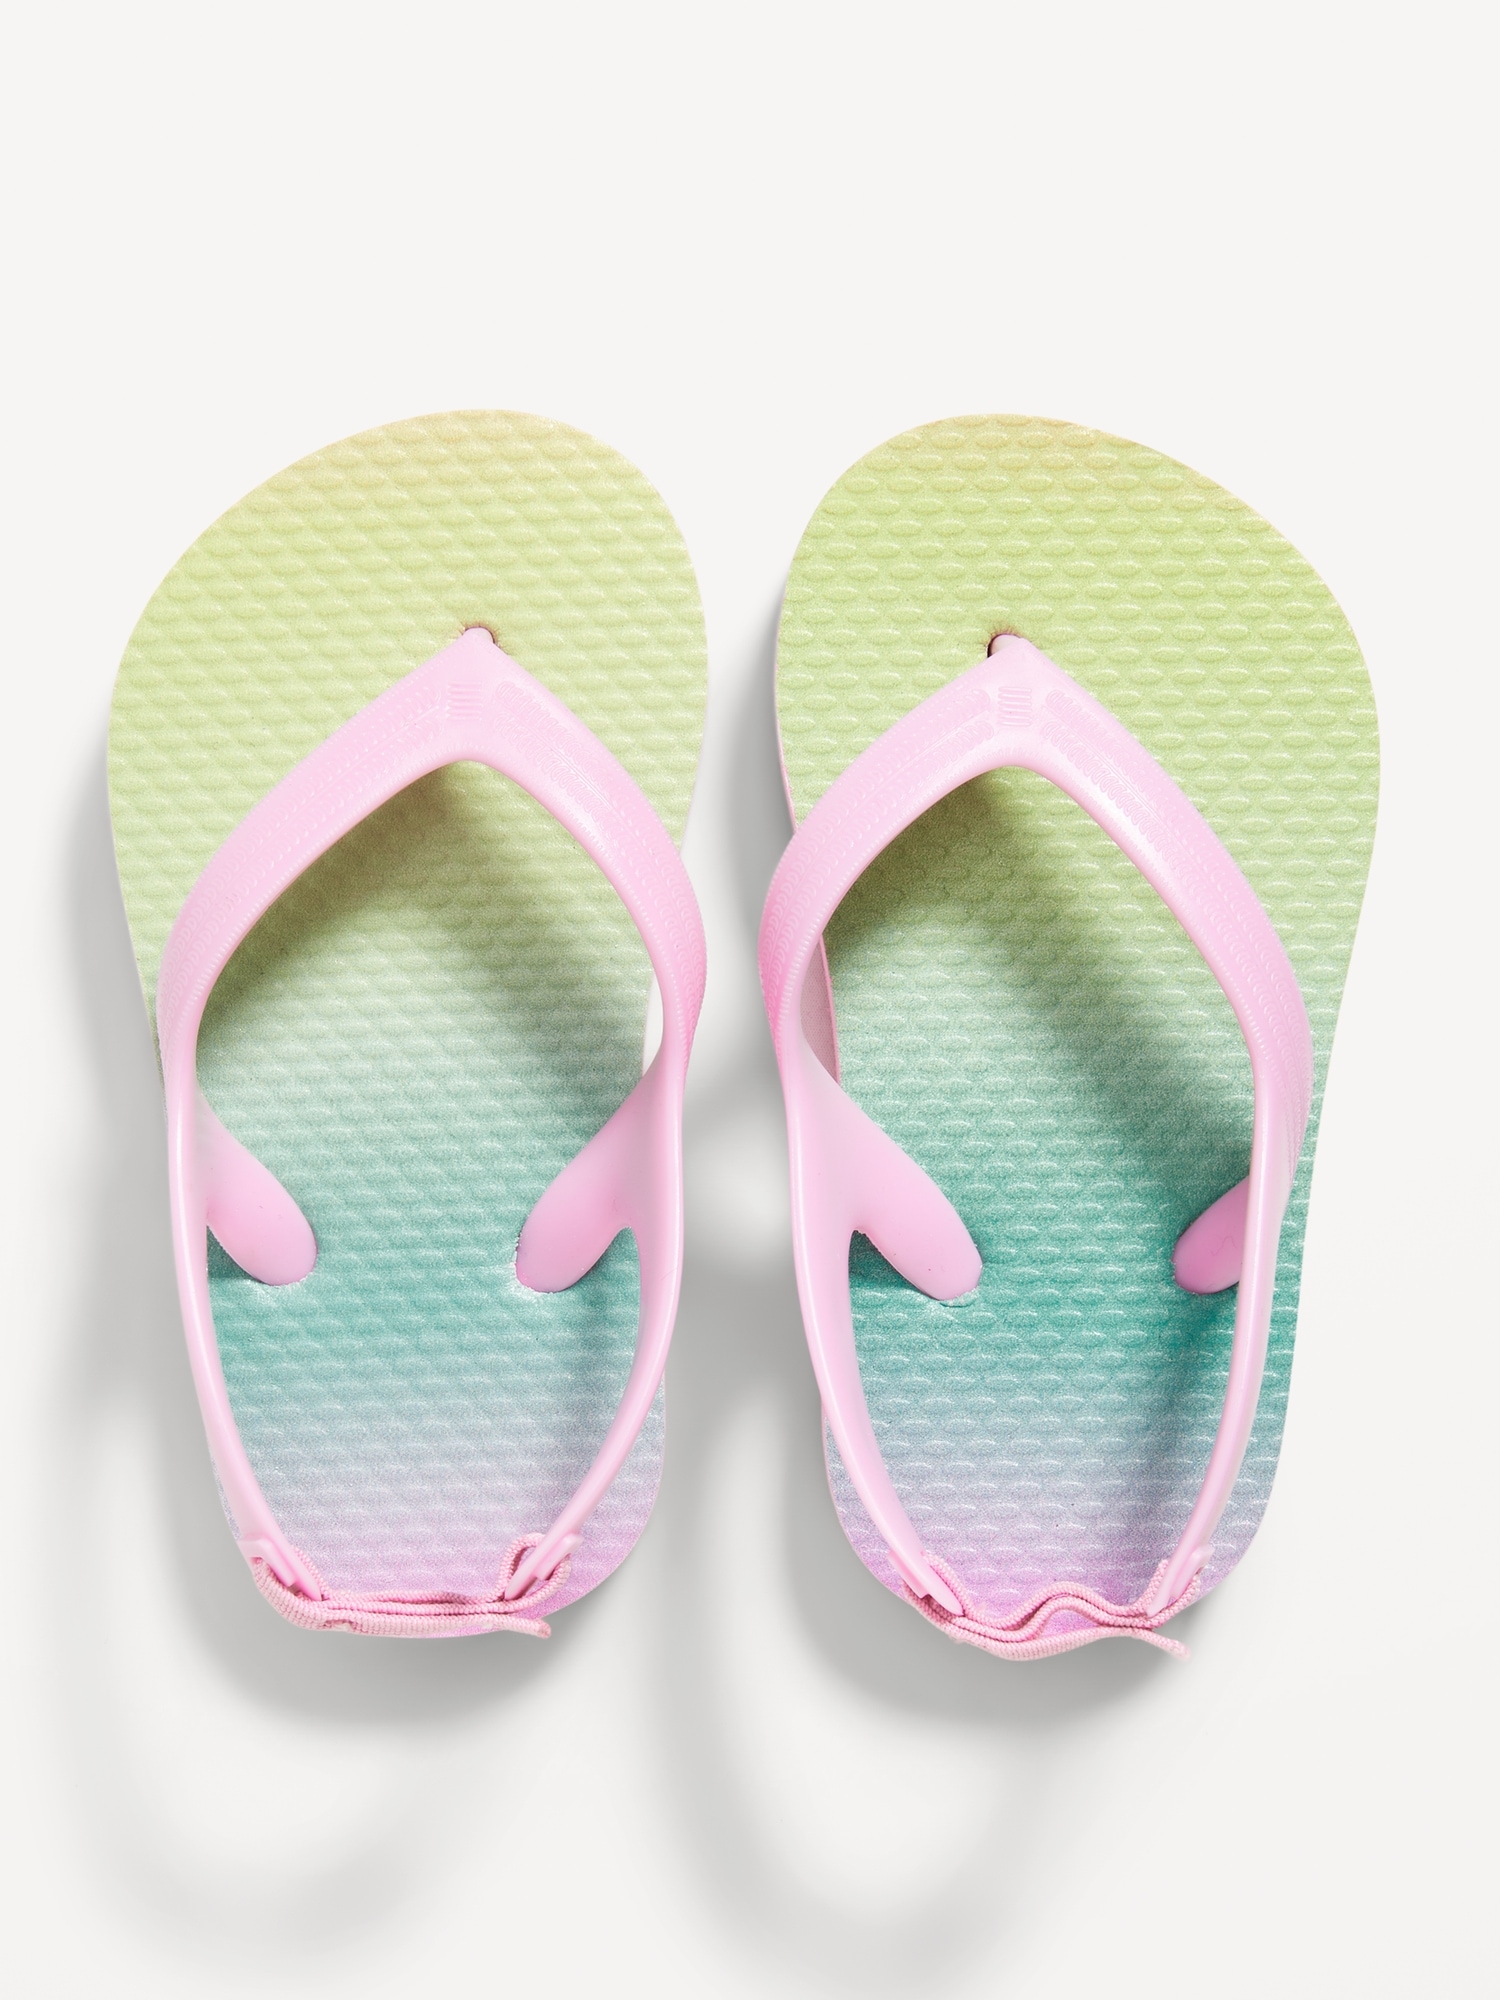 Flip-Flop Sandals for Toddler Girls (Partially Plant-Based)